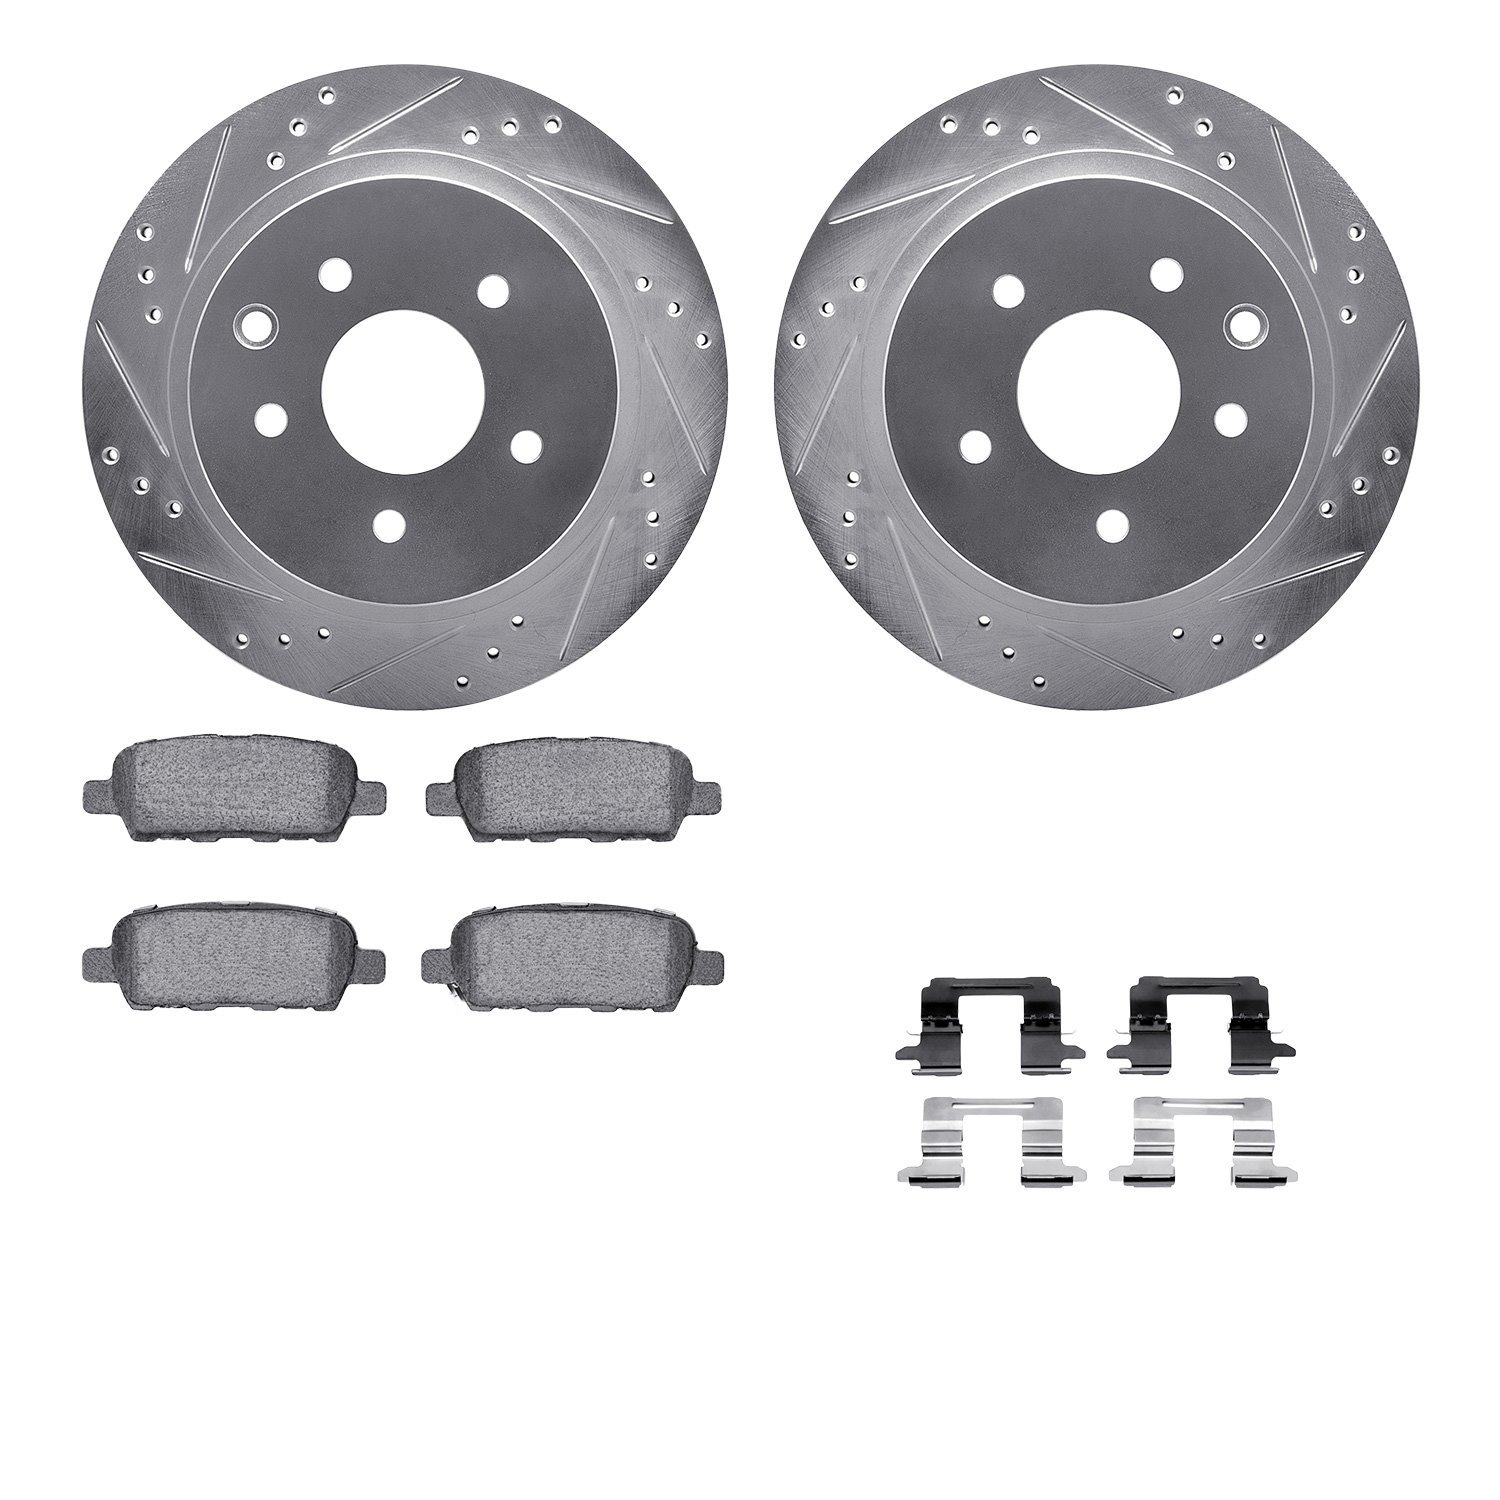 7612-67010 Drilled/Slotted Brake Rotors w/5000 Euro Ceramic Brake Pads Kit & Hardware [Silver], Fits Select Multiple Makes/Model